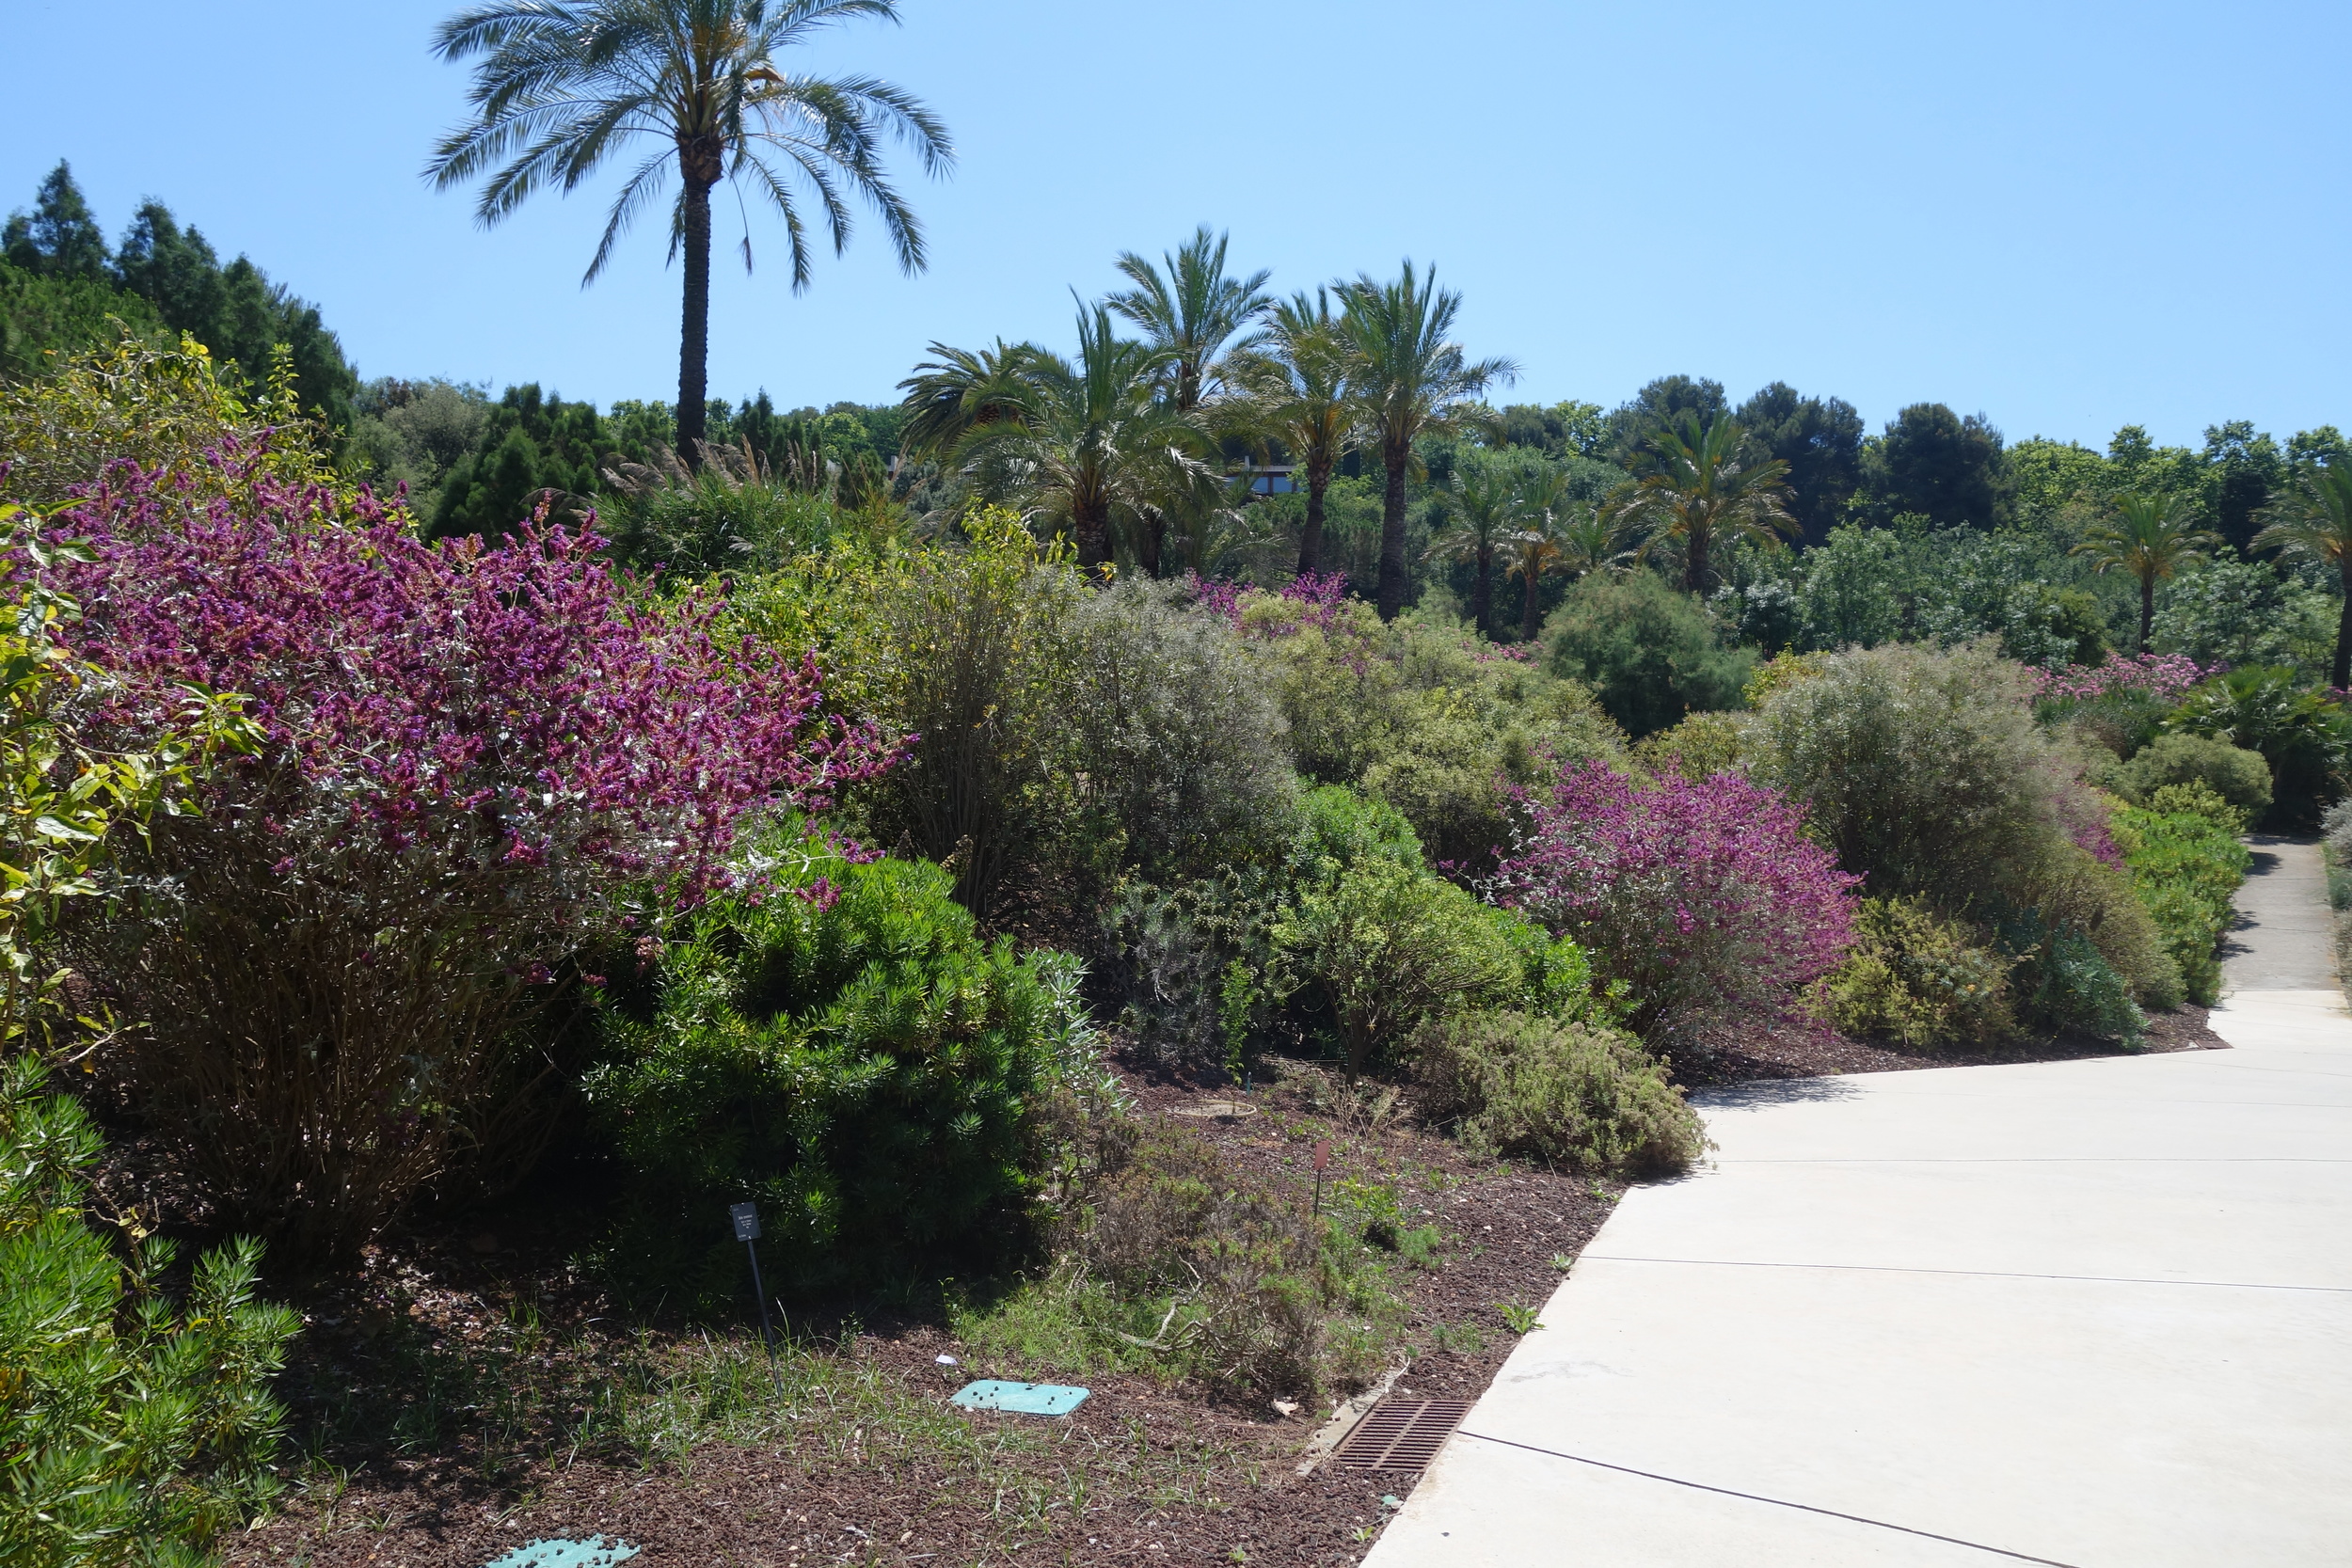  Barcelona Botanical Garden 